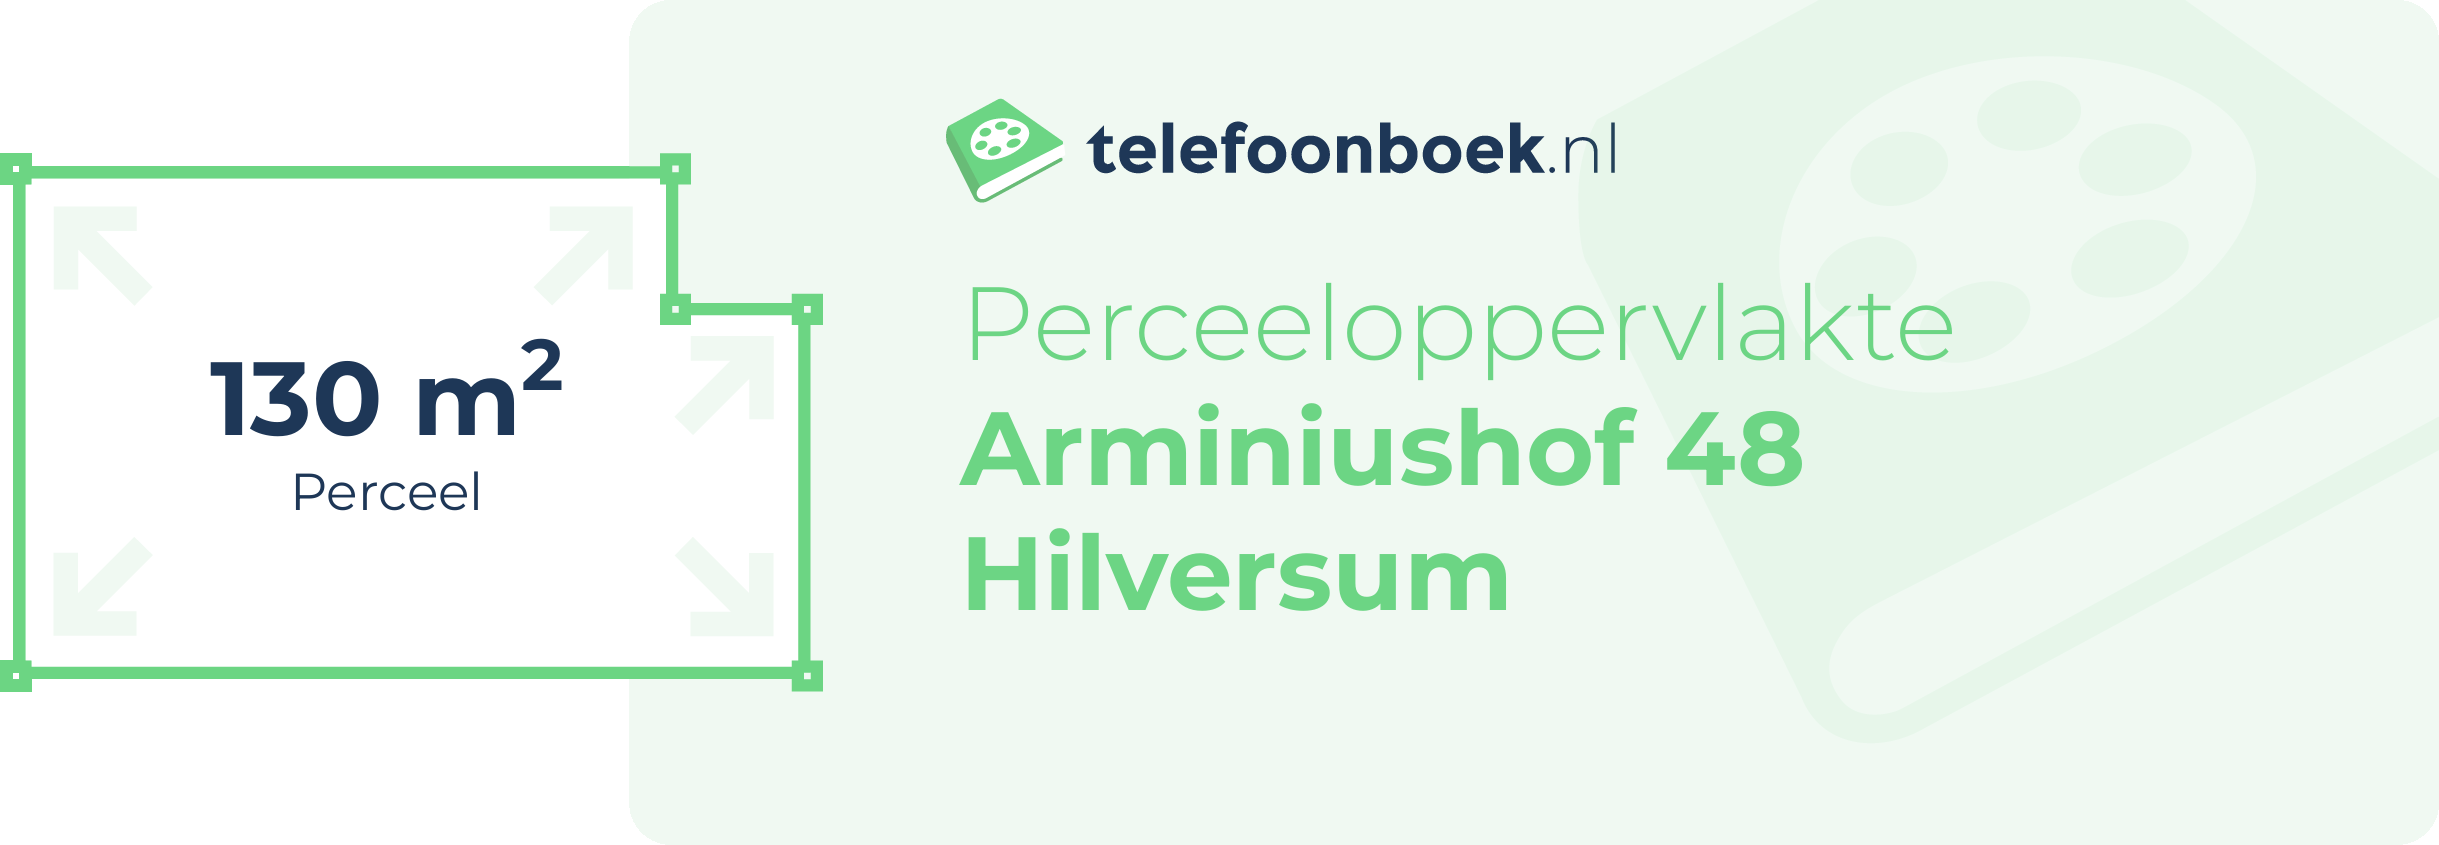 Perceeloppervlakte Arminiushof 48 Hilversum